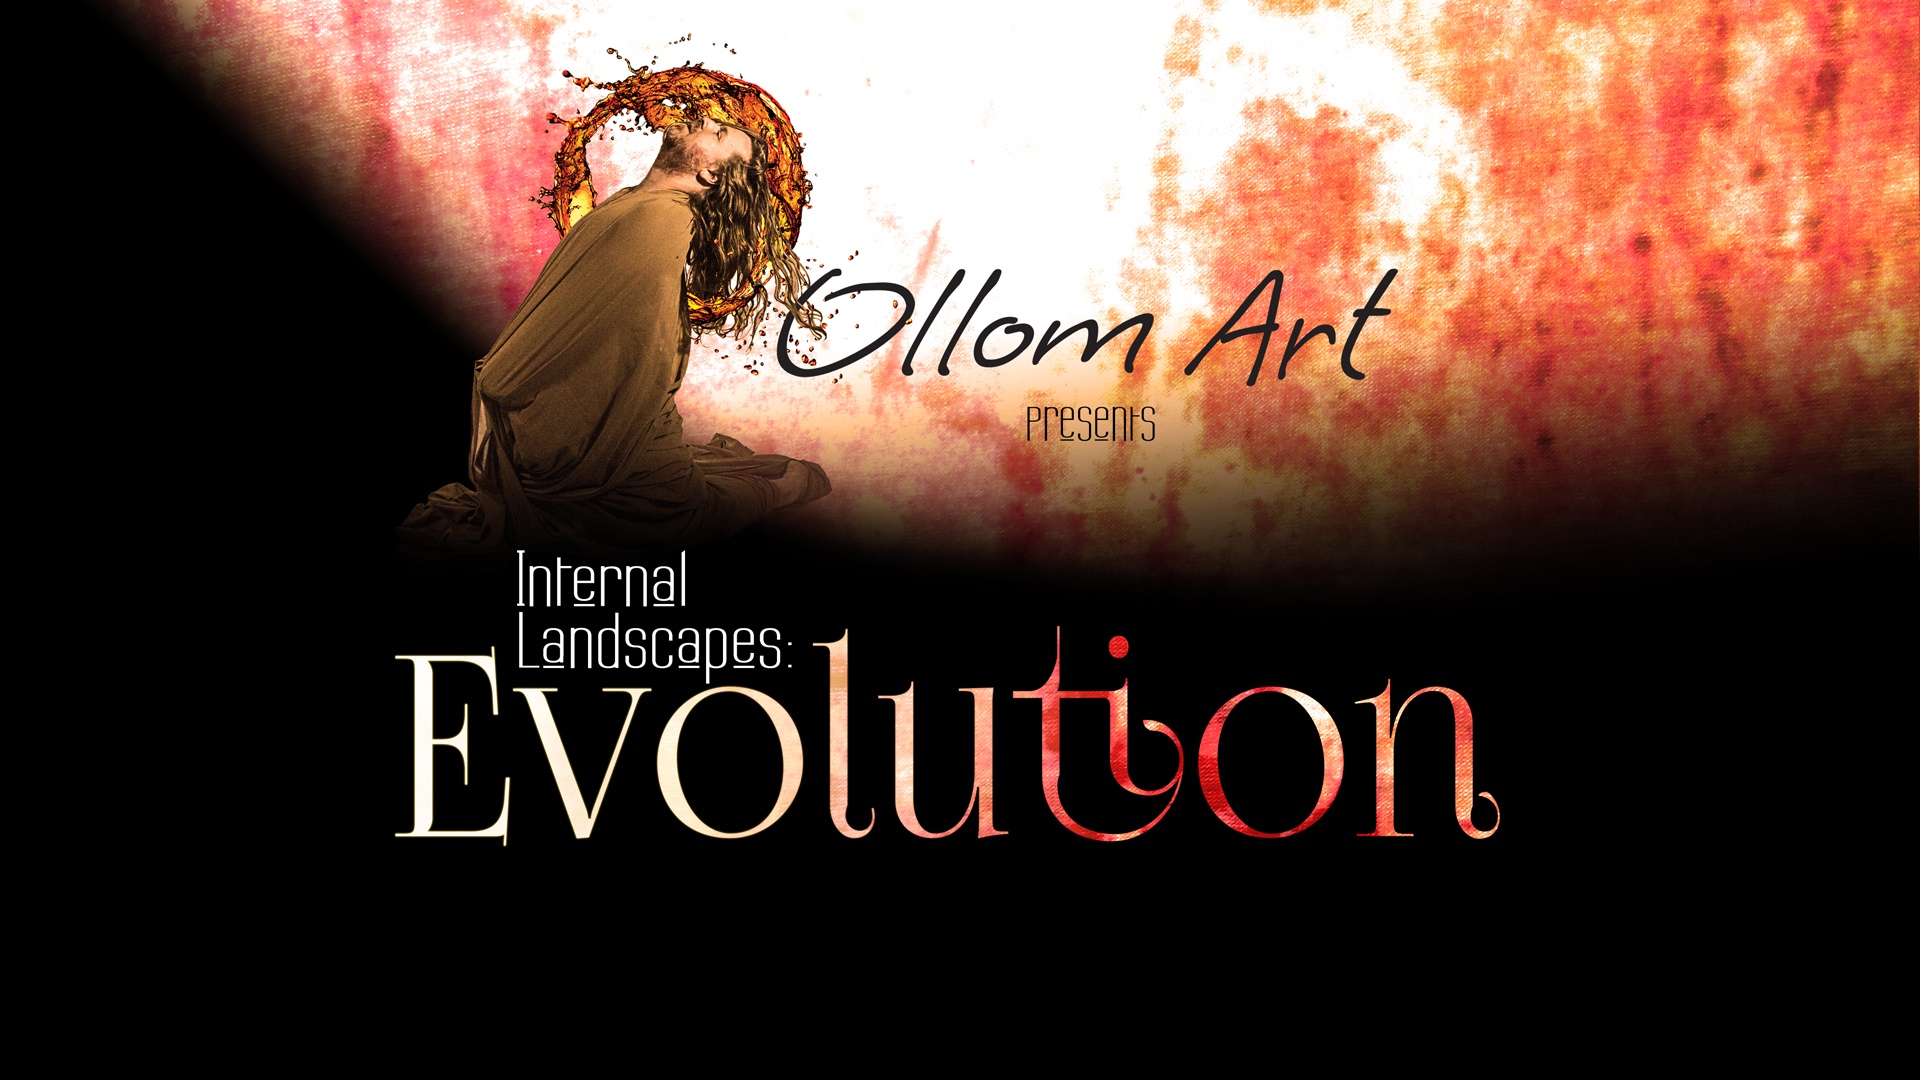 OllomArt_Evolution1920x1080px